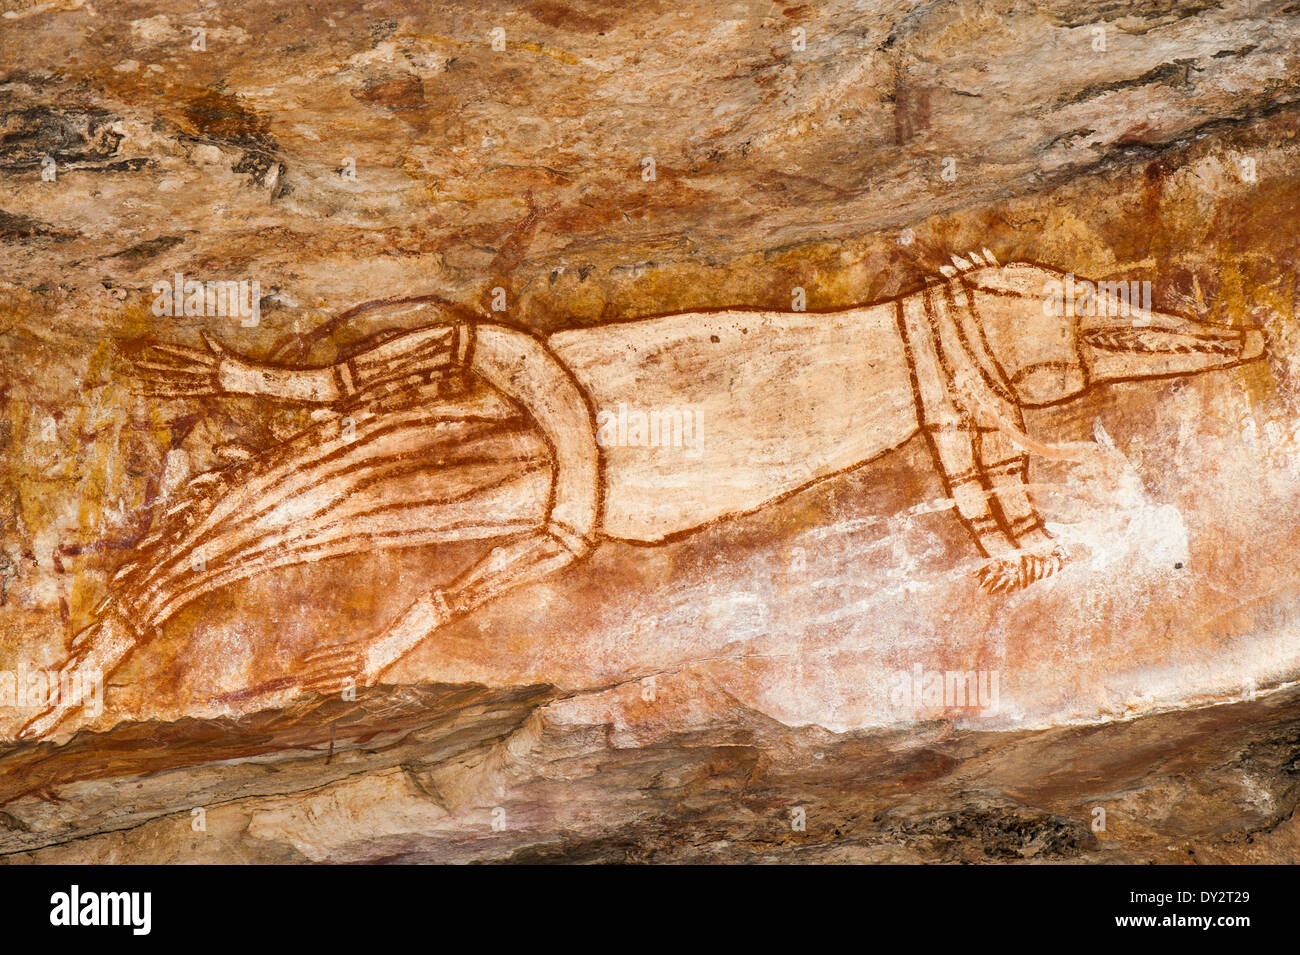 Rock art, Warddeken Indigenous Protected Area, Australia Stock Photo